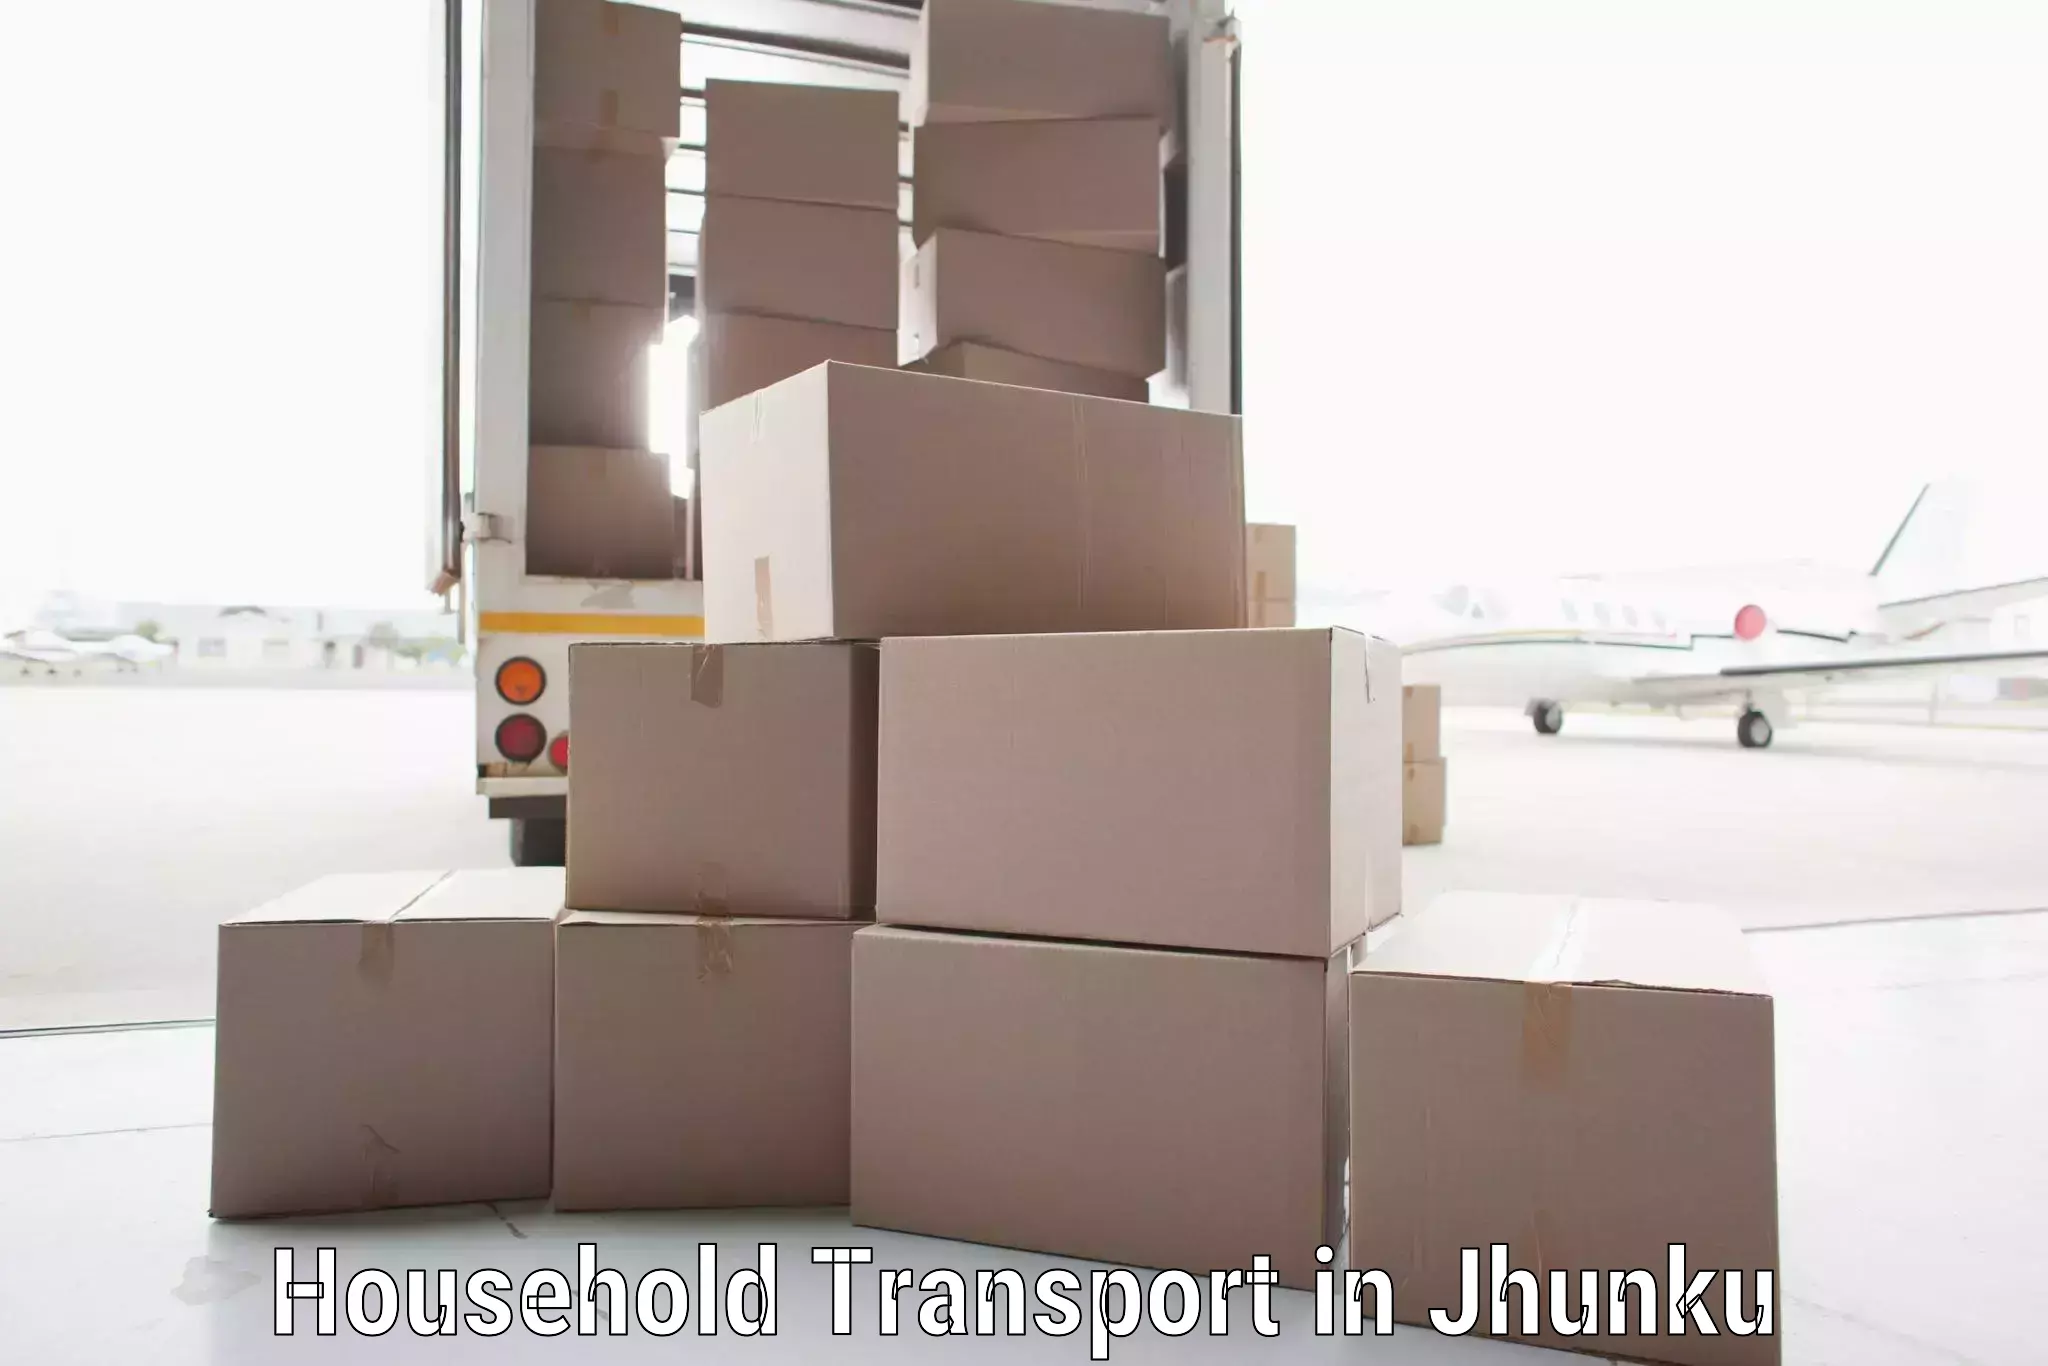 Trusted furniture transport in Jhunku